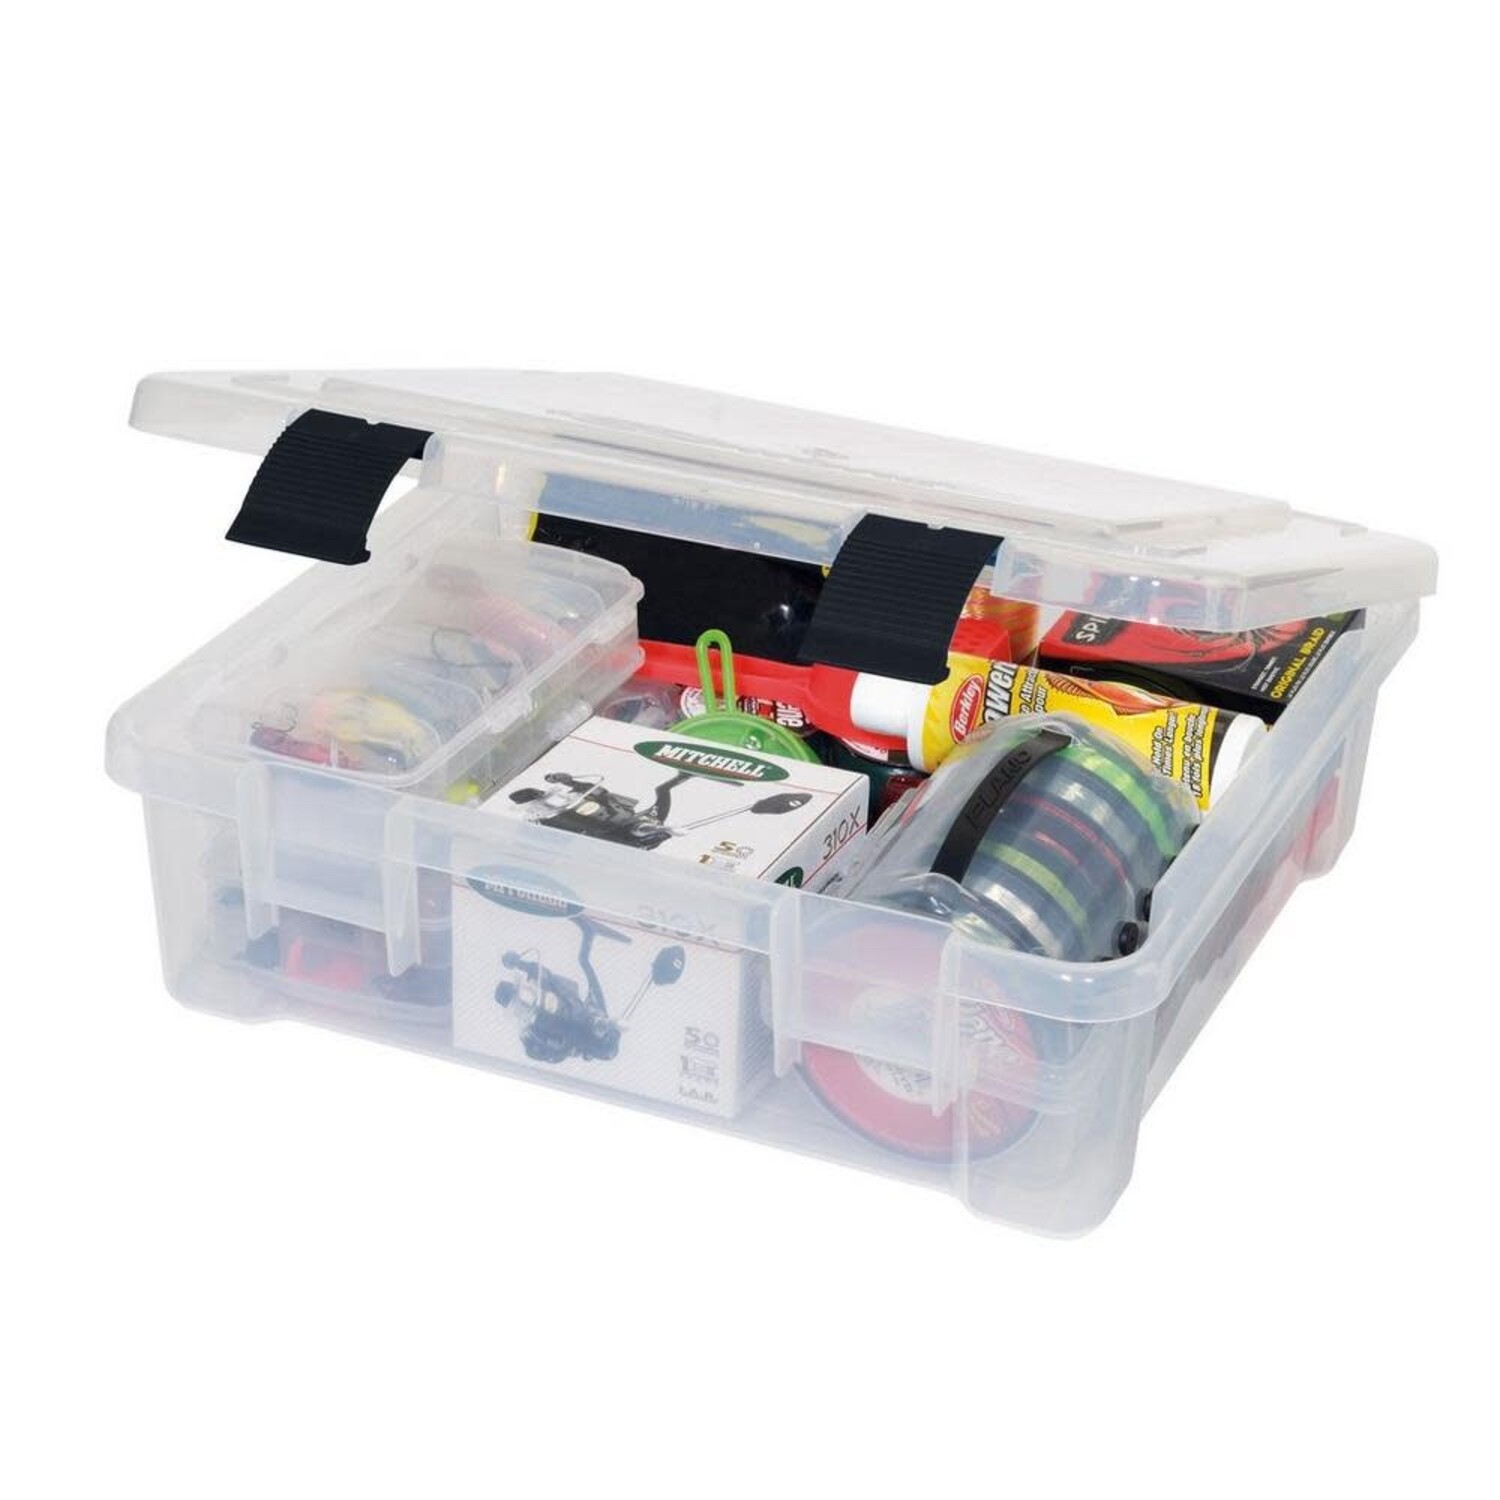 Plano Tackle Boxes - Plano Storage Cases